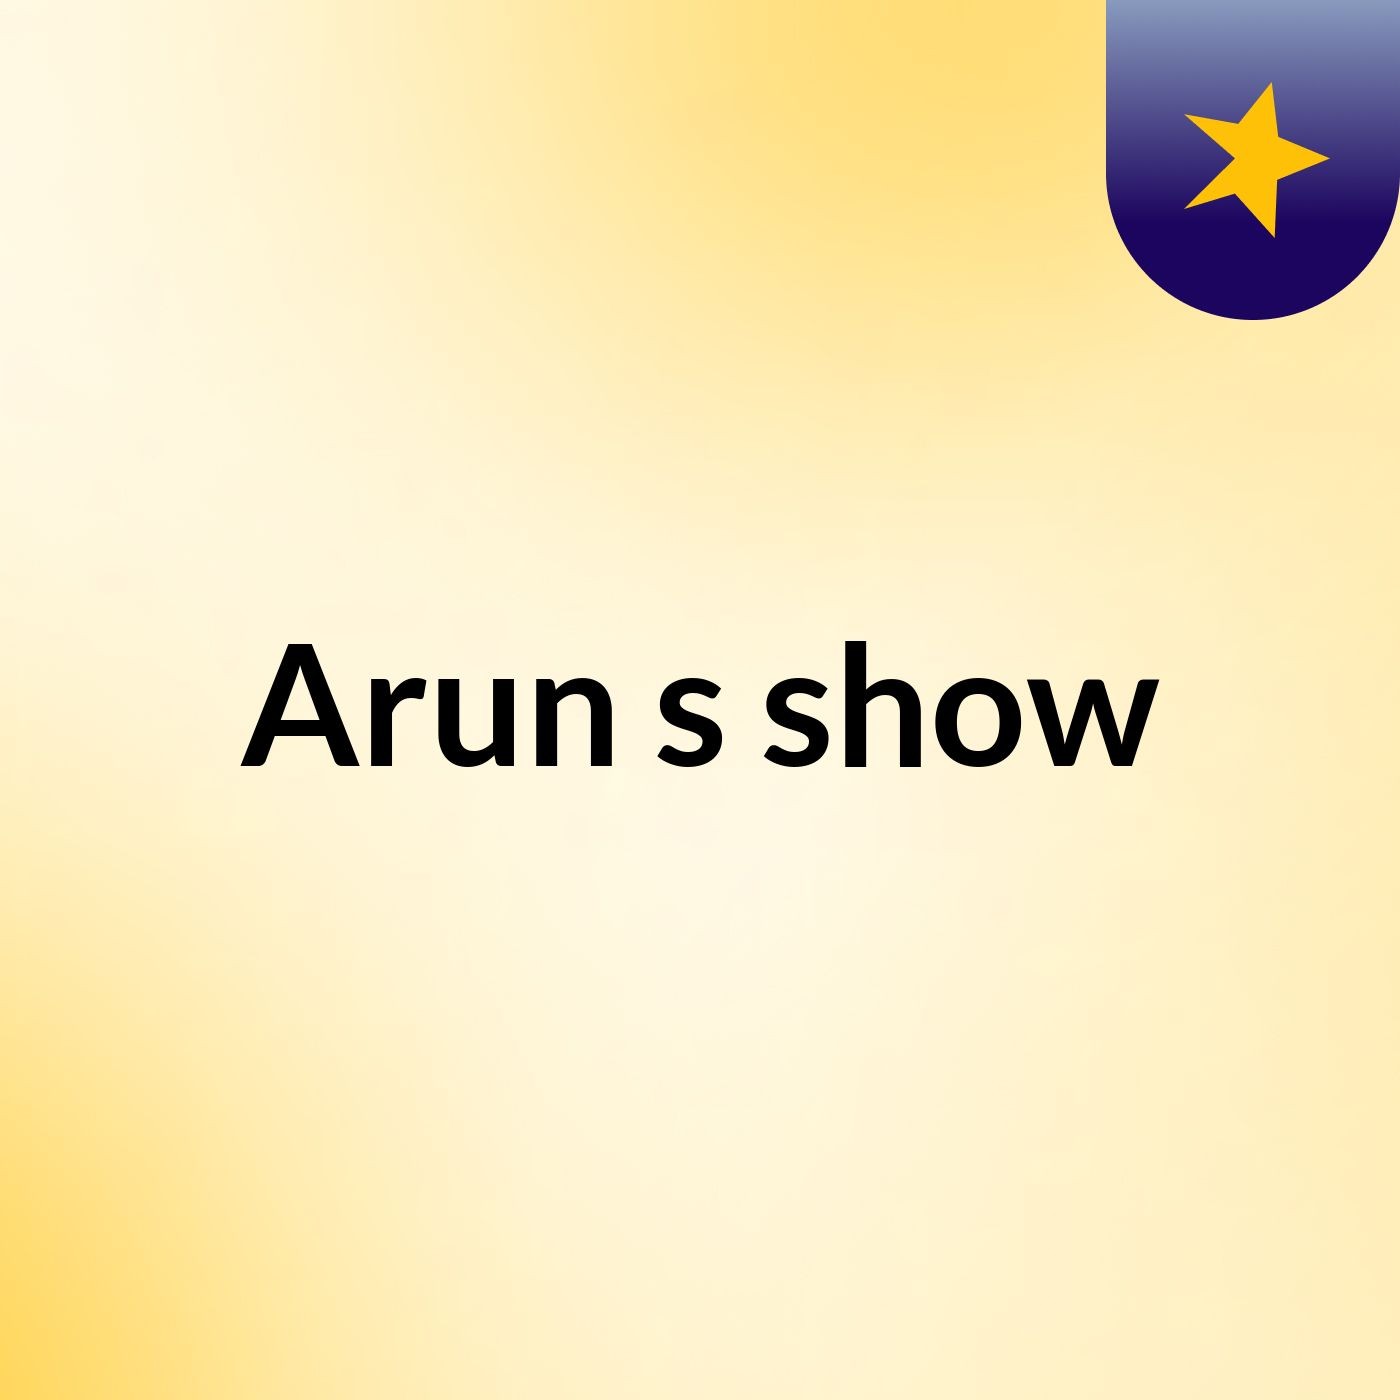 Arun's show